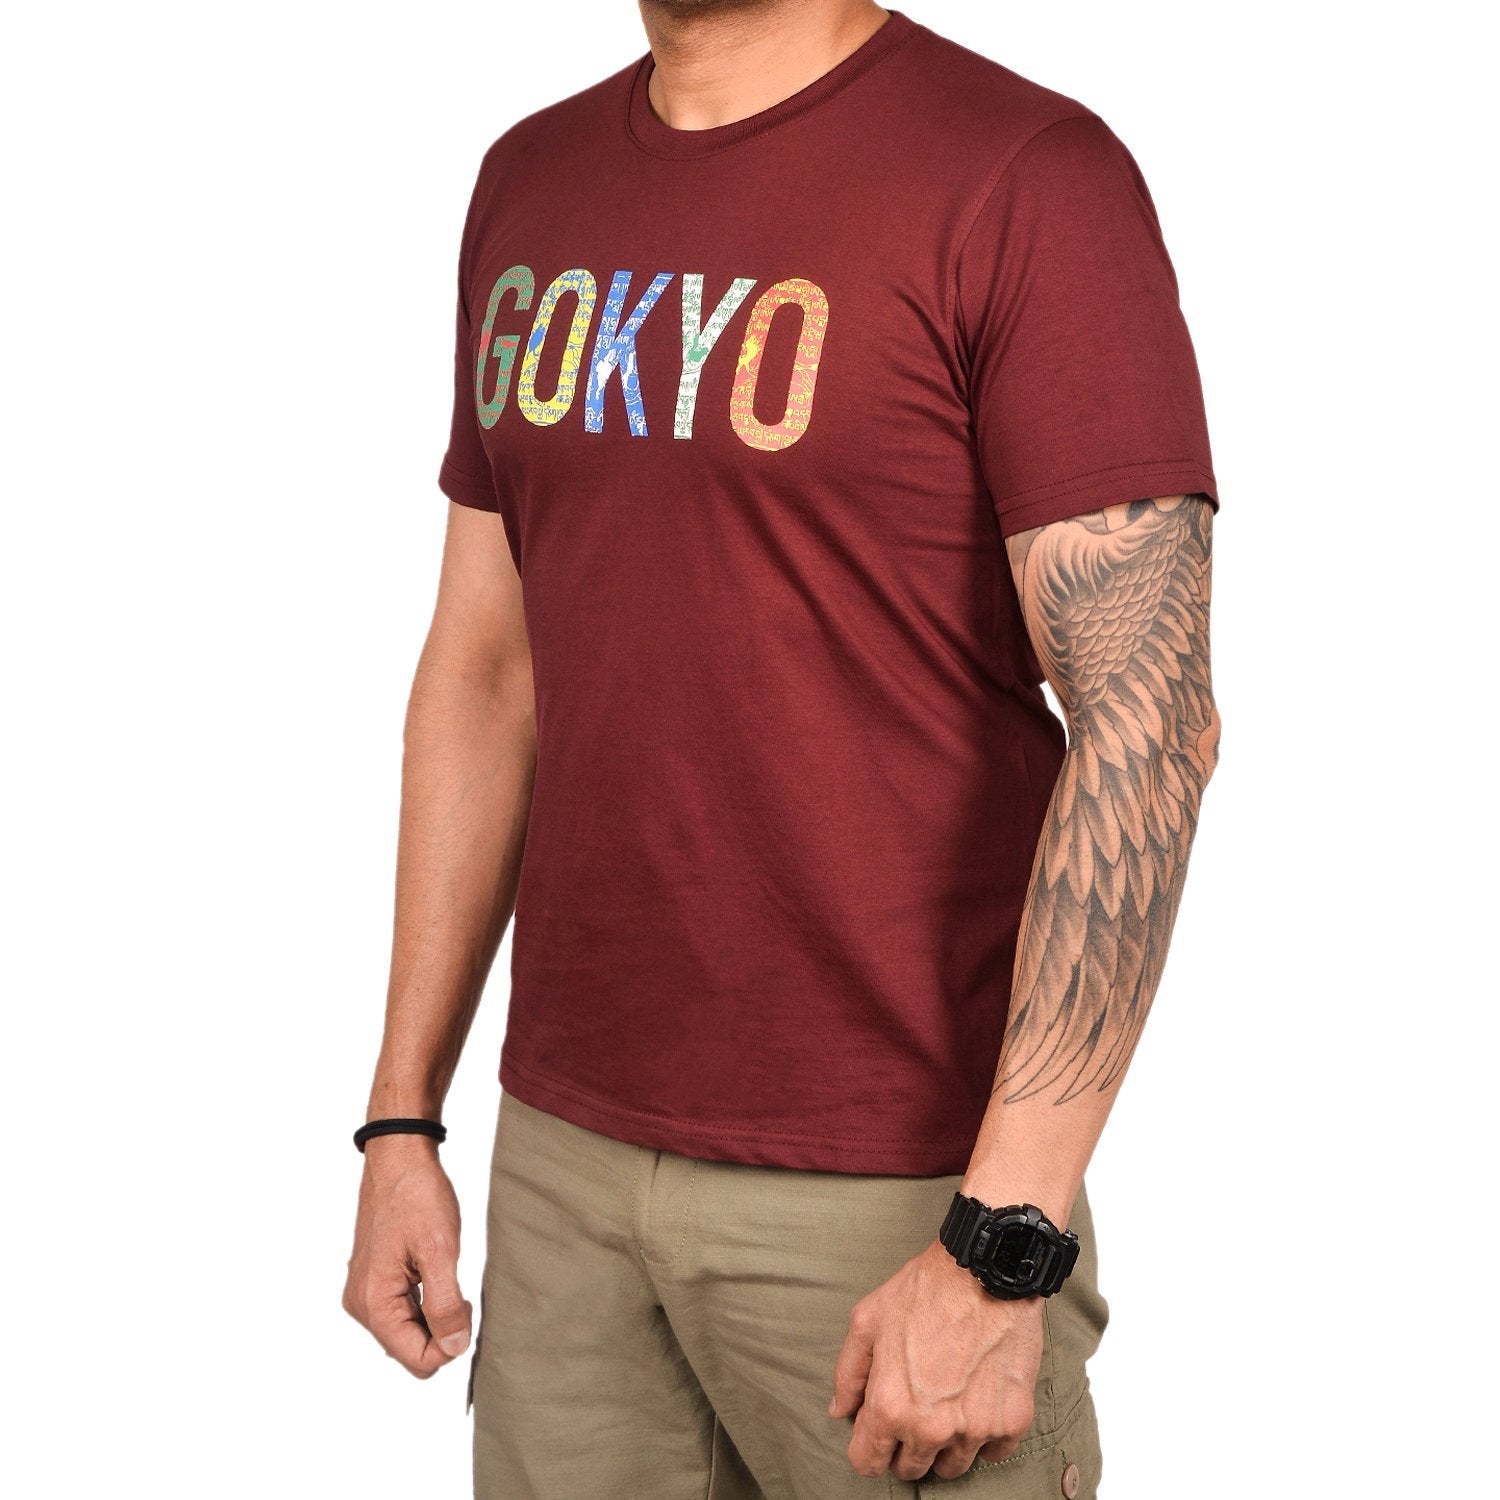 Buy Gokyo Round Neck Classic Gokyo Tshirt - Flag | Trekking & Hiking T-shirts at Gokyo Outdoor Clothing & Gear